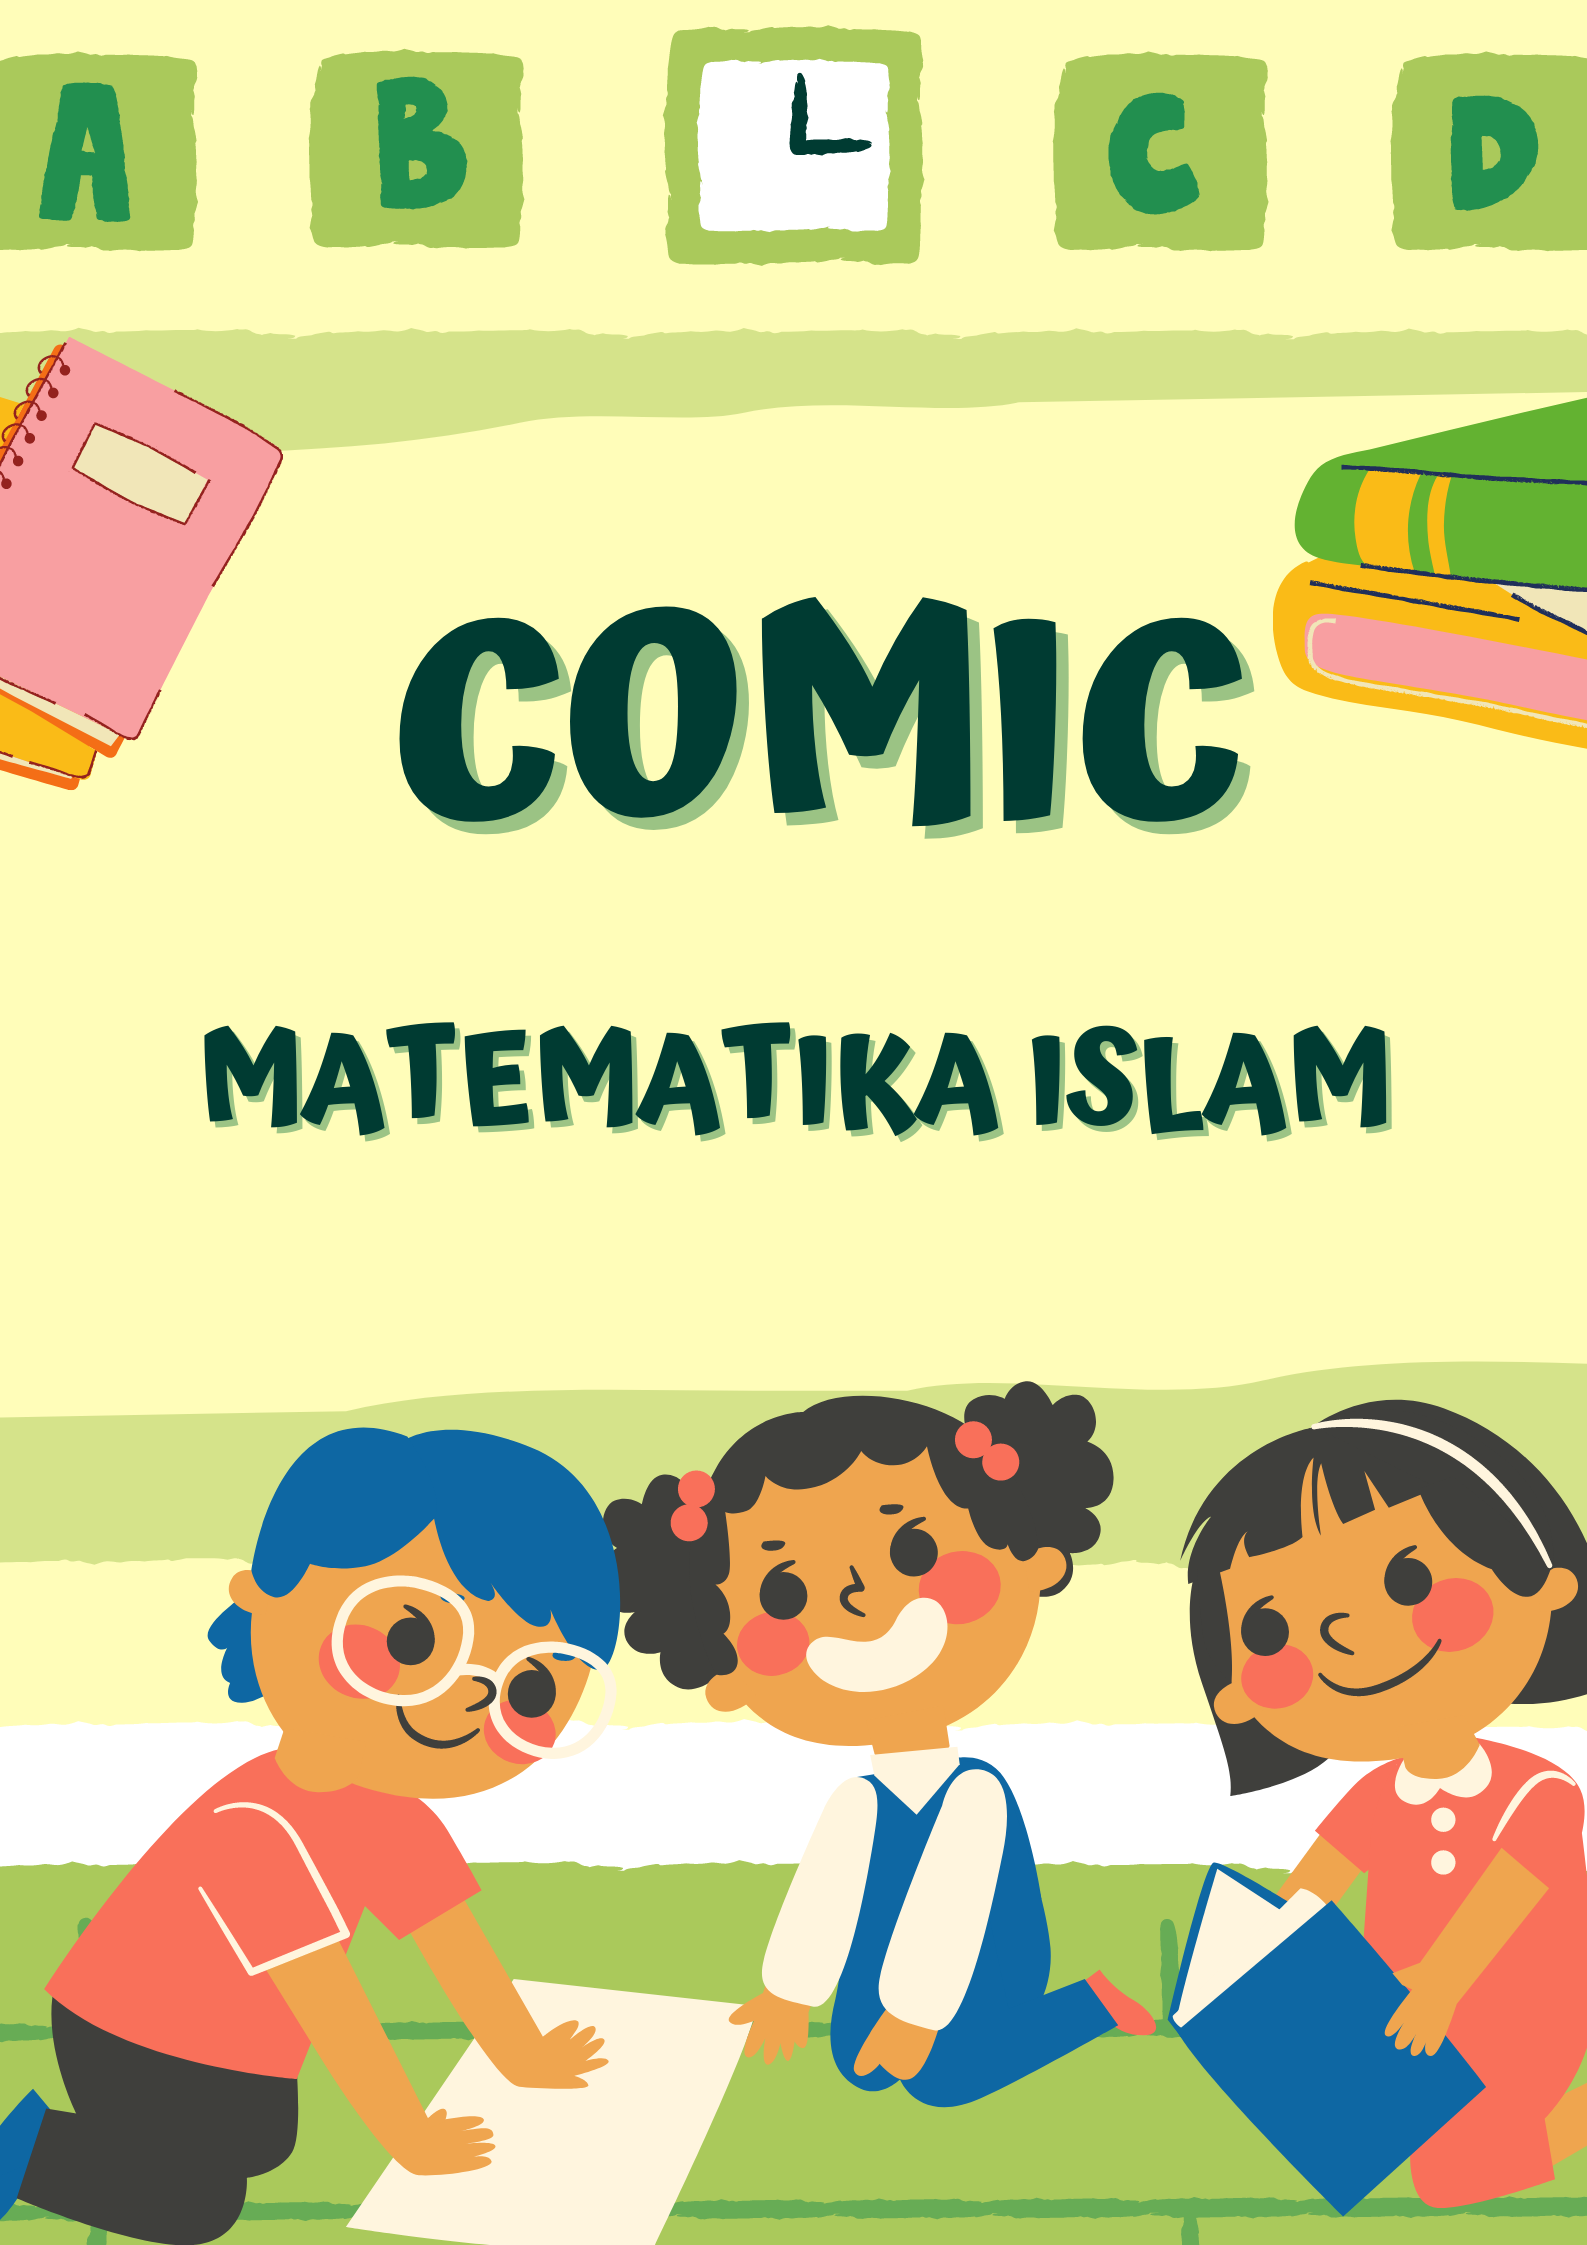 Penerapan Media Komik Matematika Islam Sebagai Upaya Meningkatkan Kemampuan Berpikir Kritis